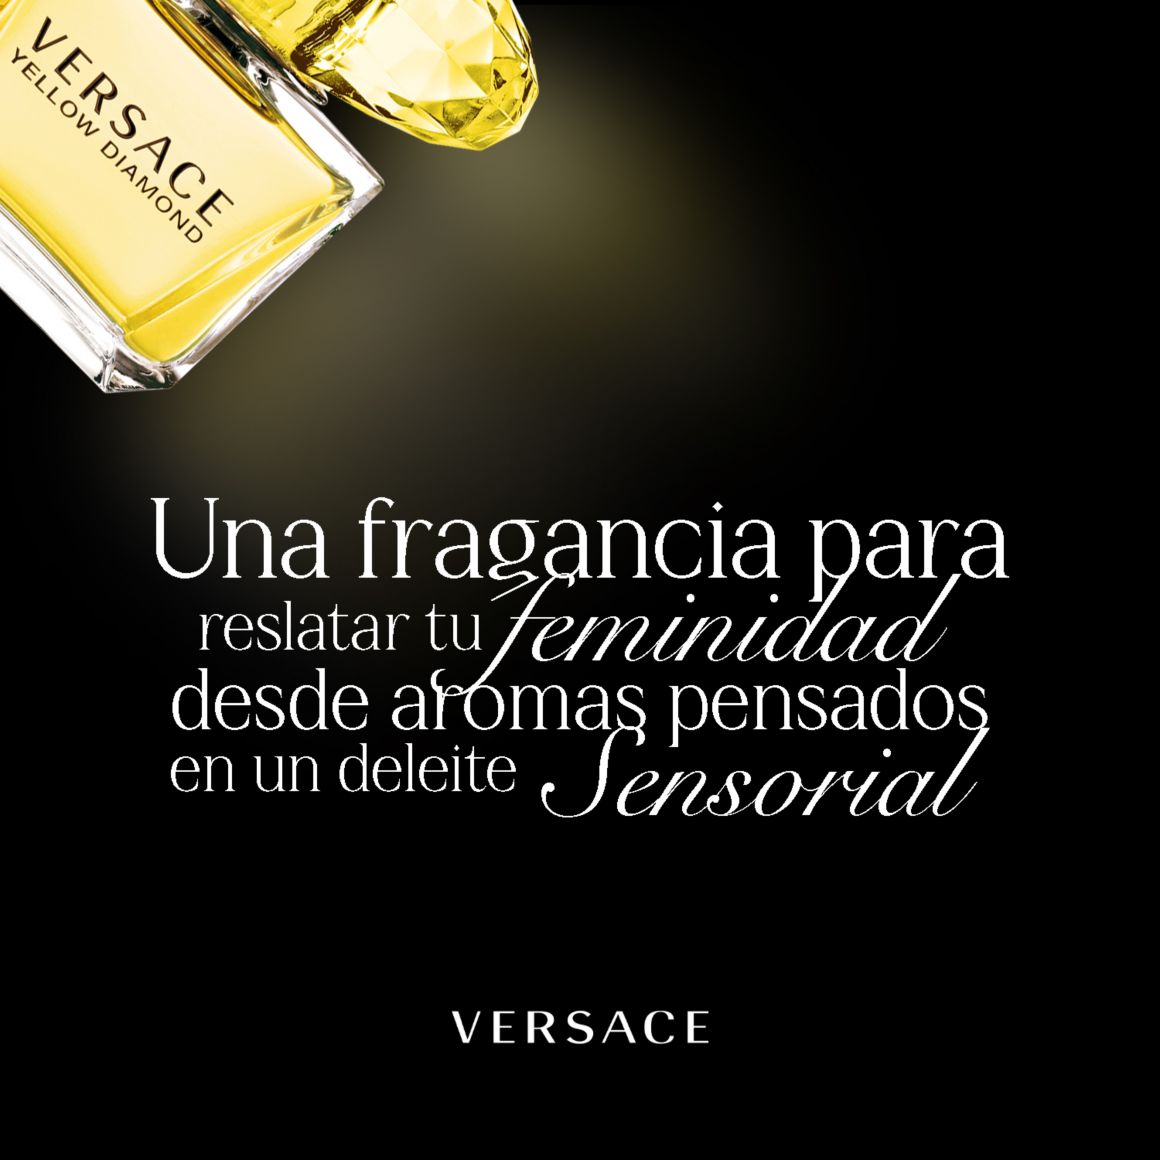 Perfume, Fragancia, Aroma, Versace, VERSACE, Fragancia Versace, Yellow, Diamon, Yellow Diamons, Amarillo, Fragancia Amarilla, Frase